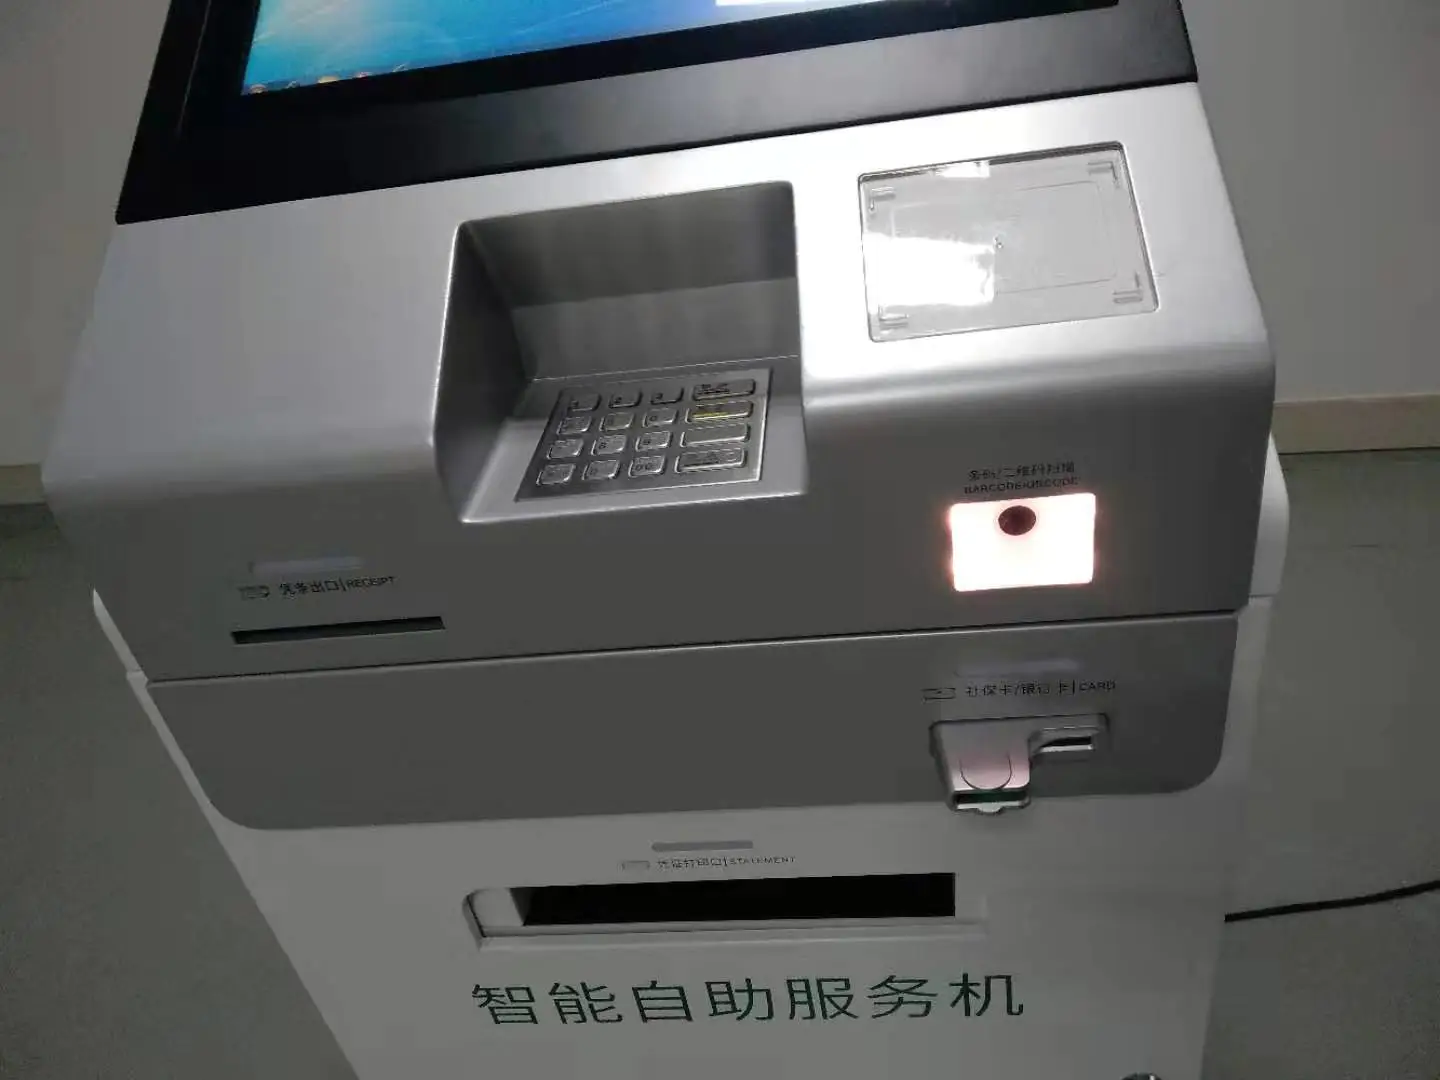 digital signage self service hopspital kiosk terminal with social security card and bank card